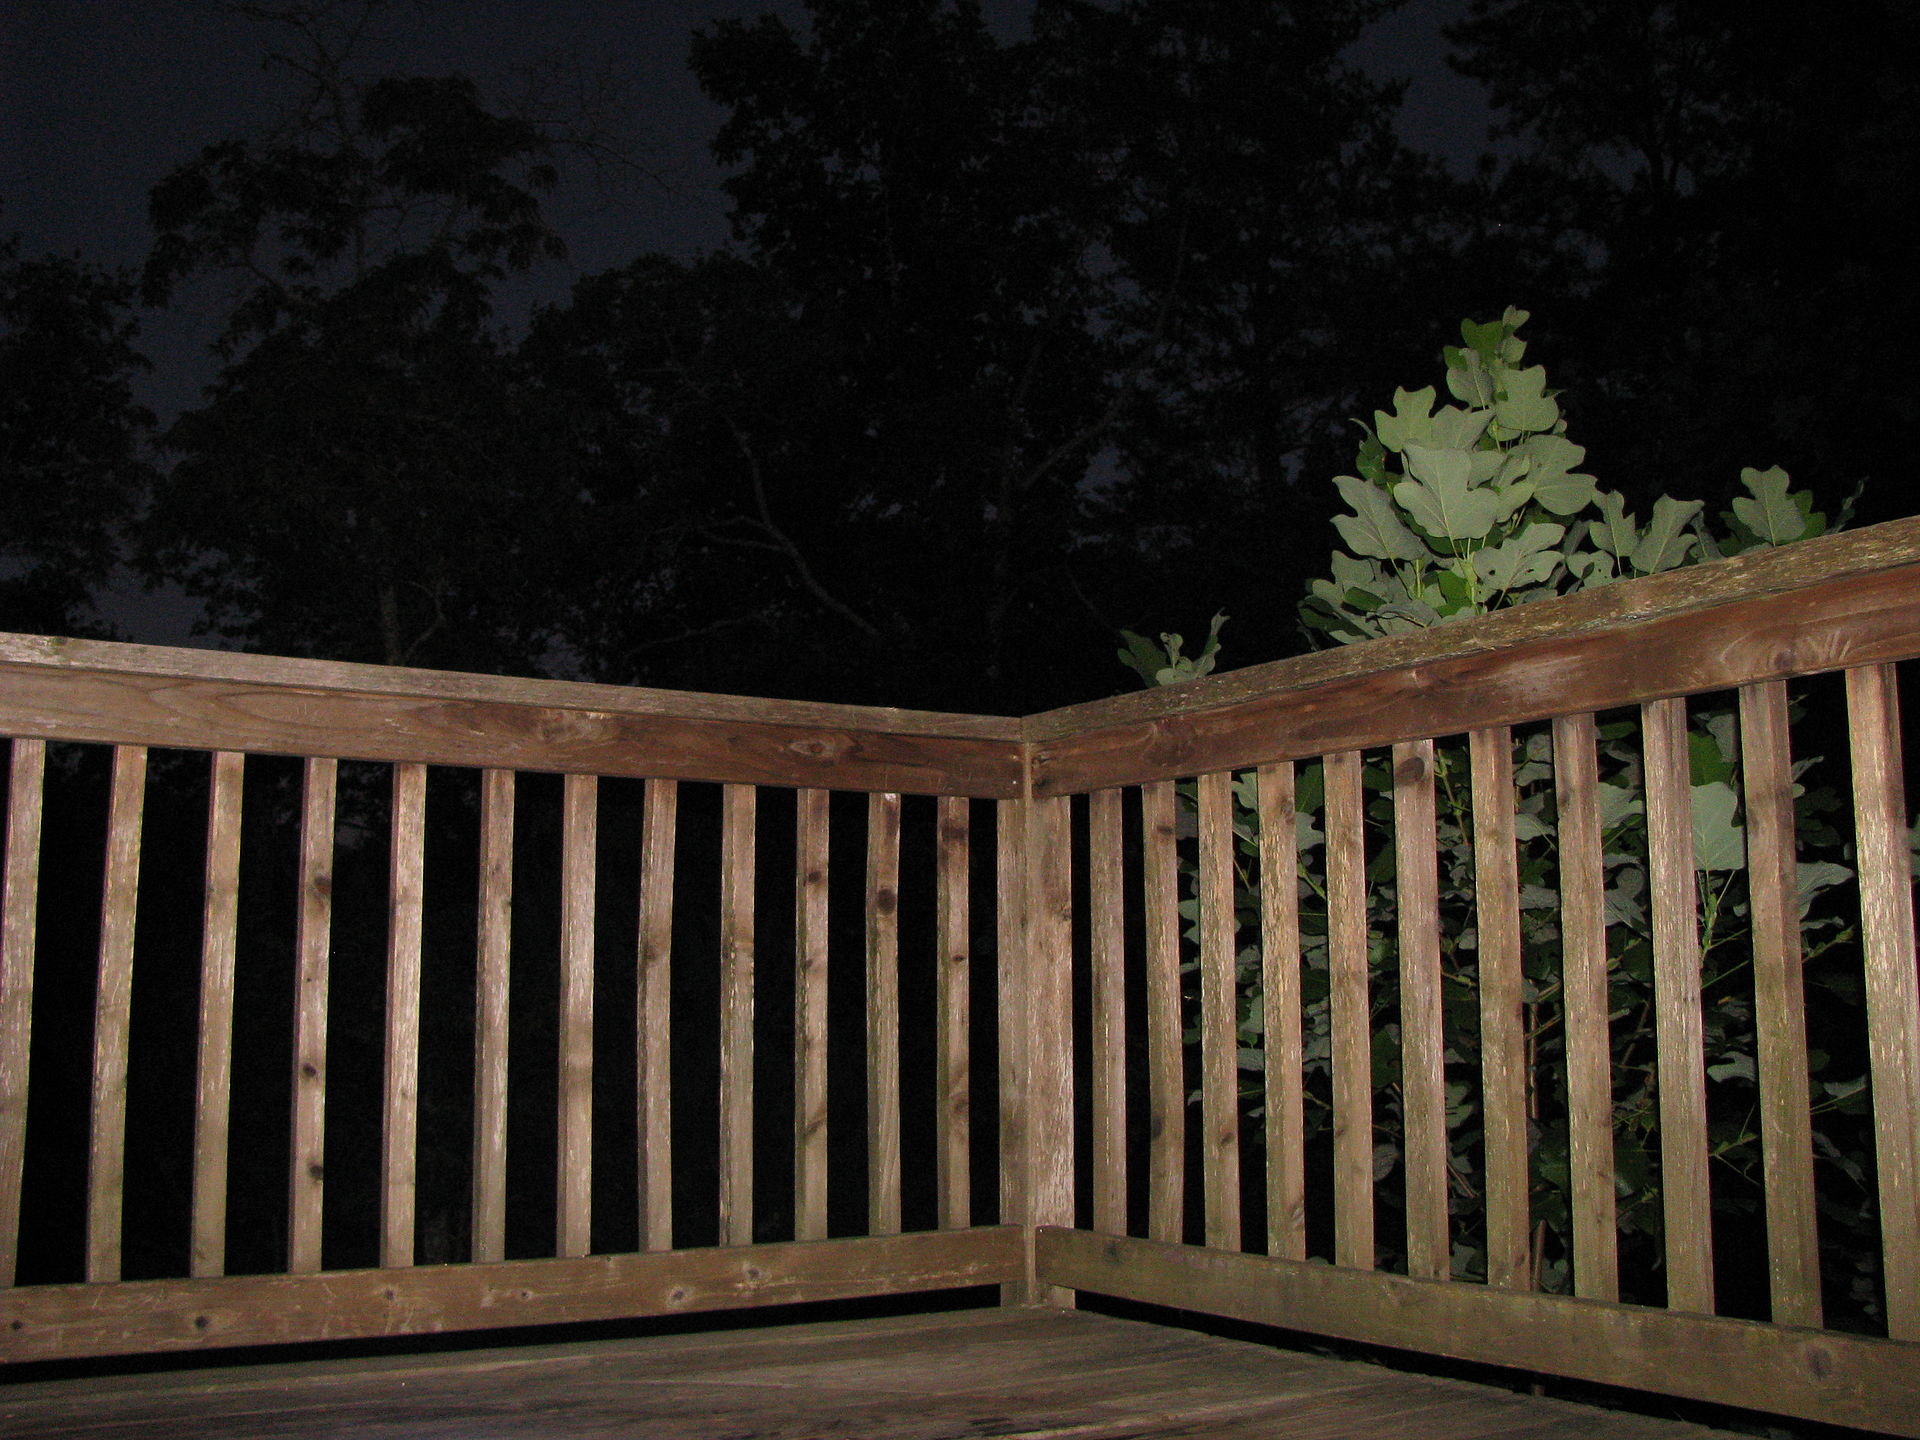 Deck railing - Wikipedia